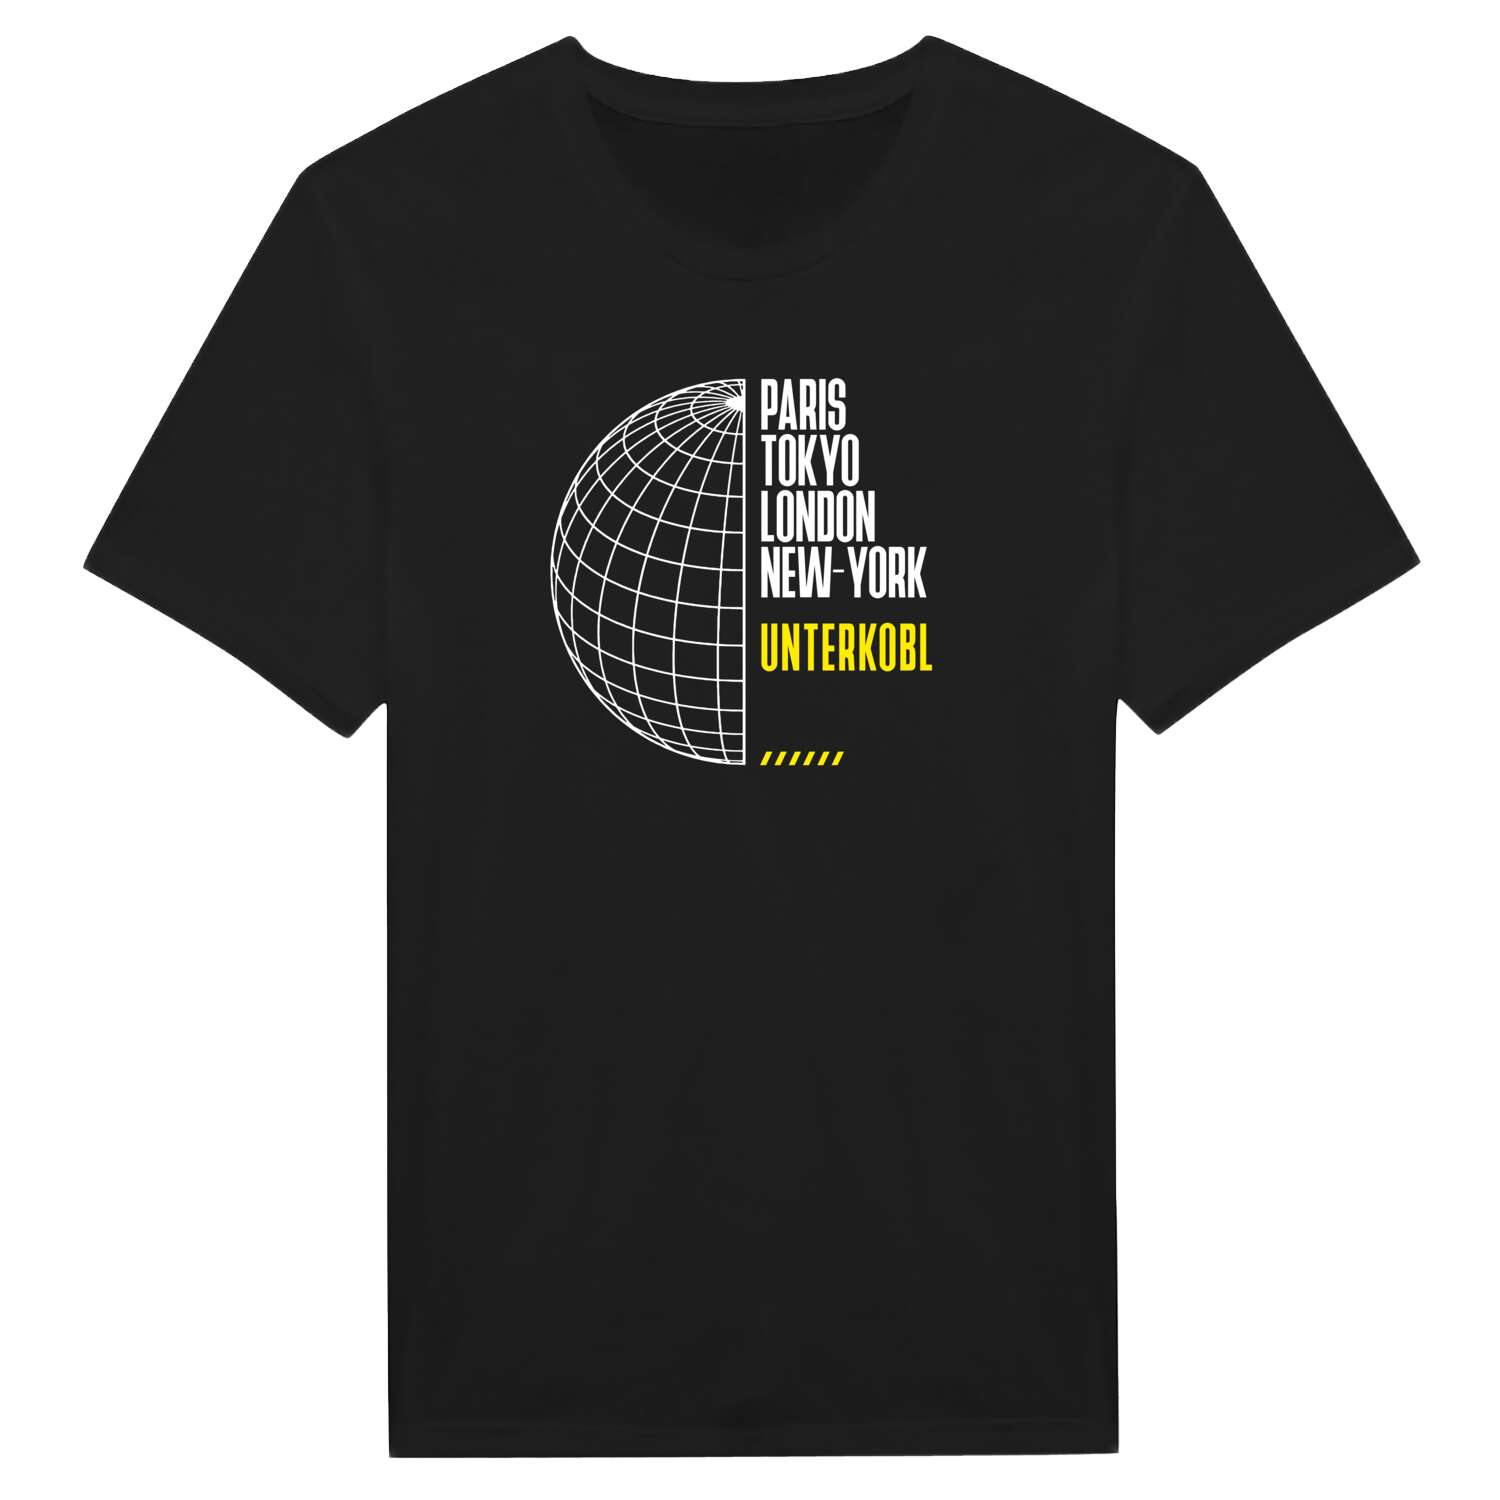 Unterkobl T-Shirt »Paris Tokyo London«